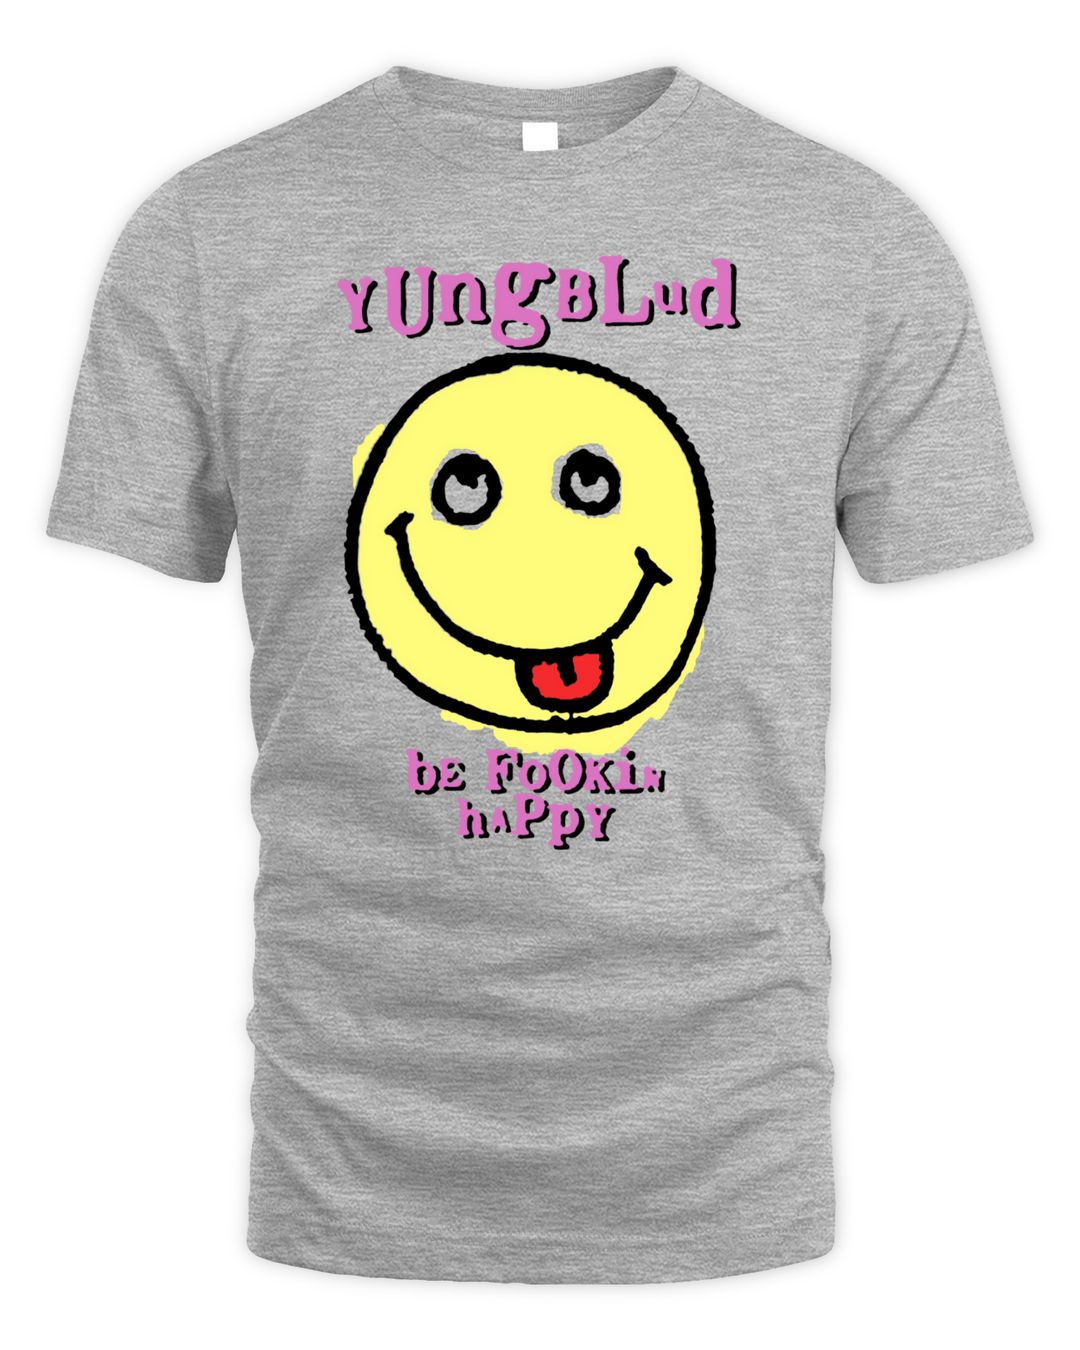 Yungblud Merch Raver Smile Shirt